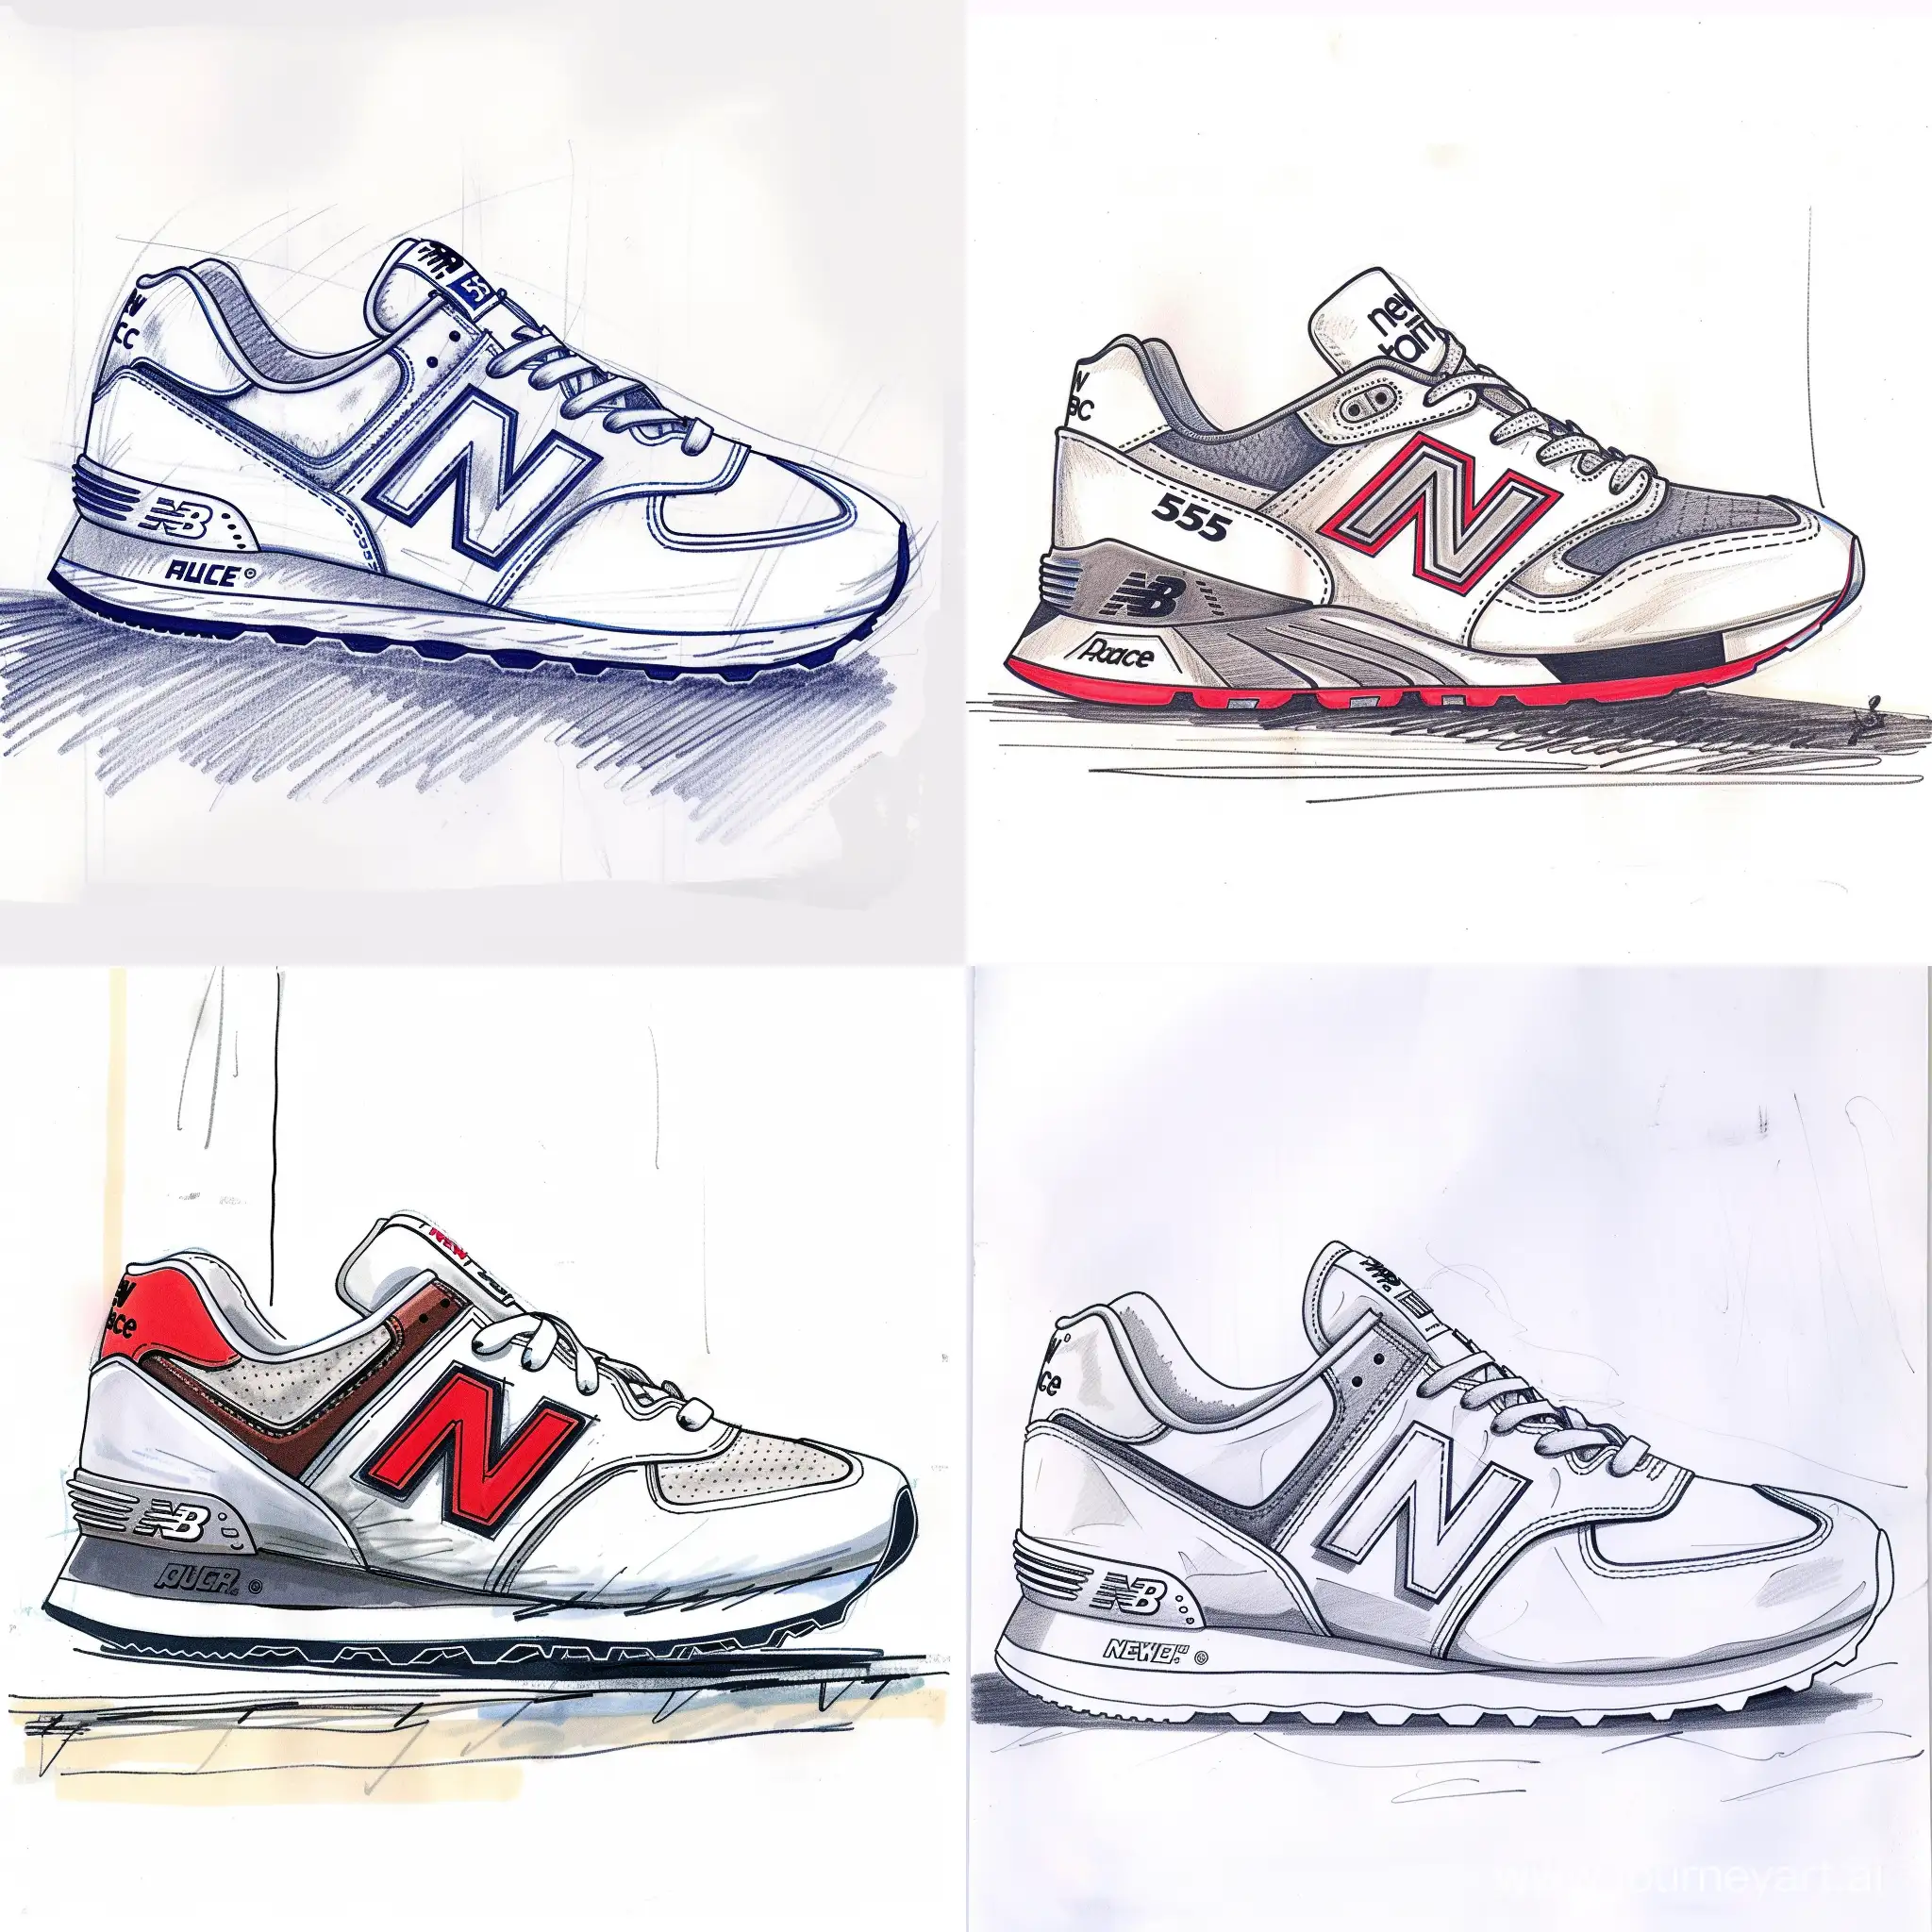 sneaker design sketch like new balance 550